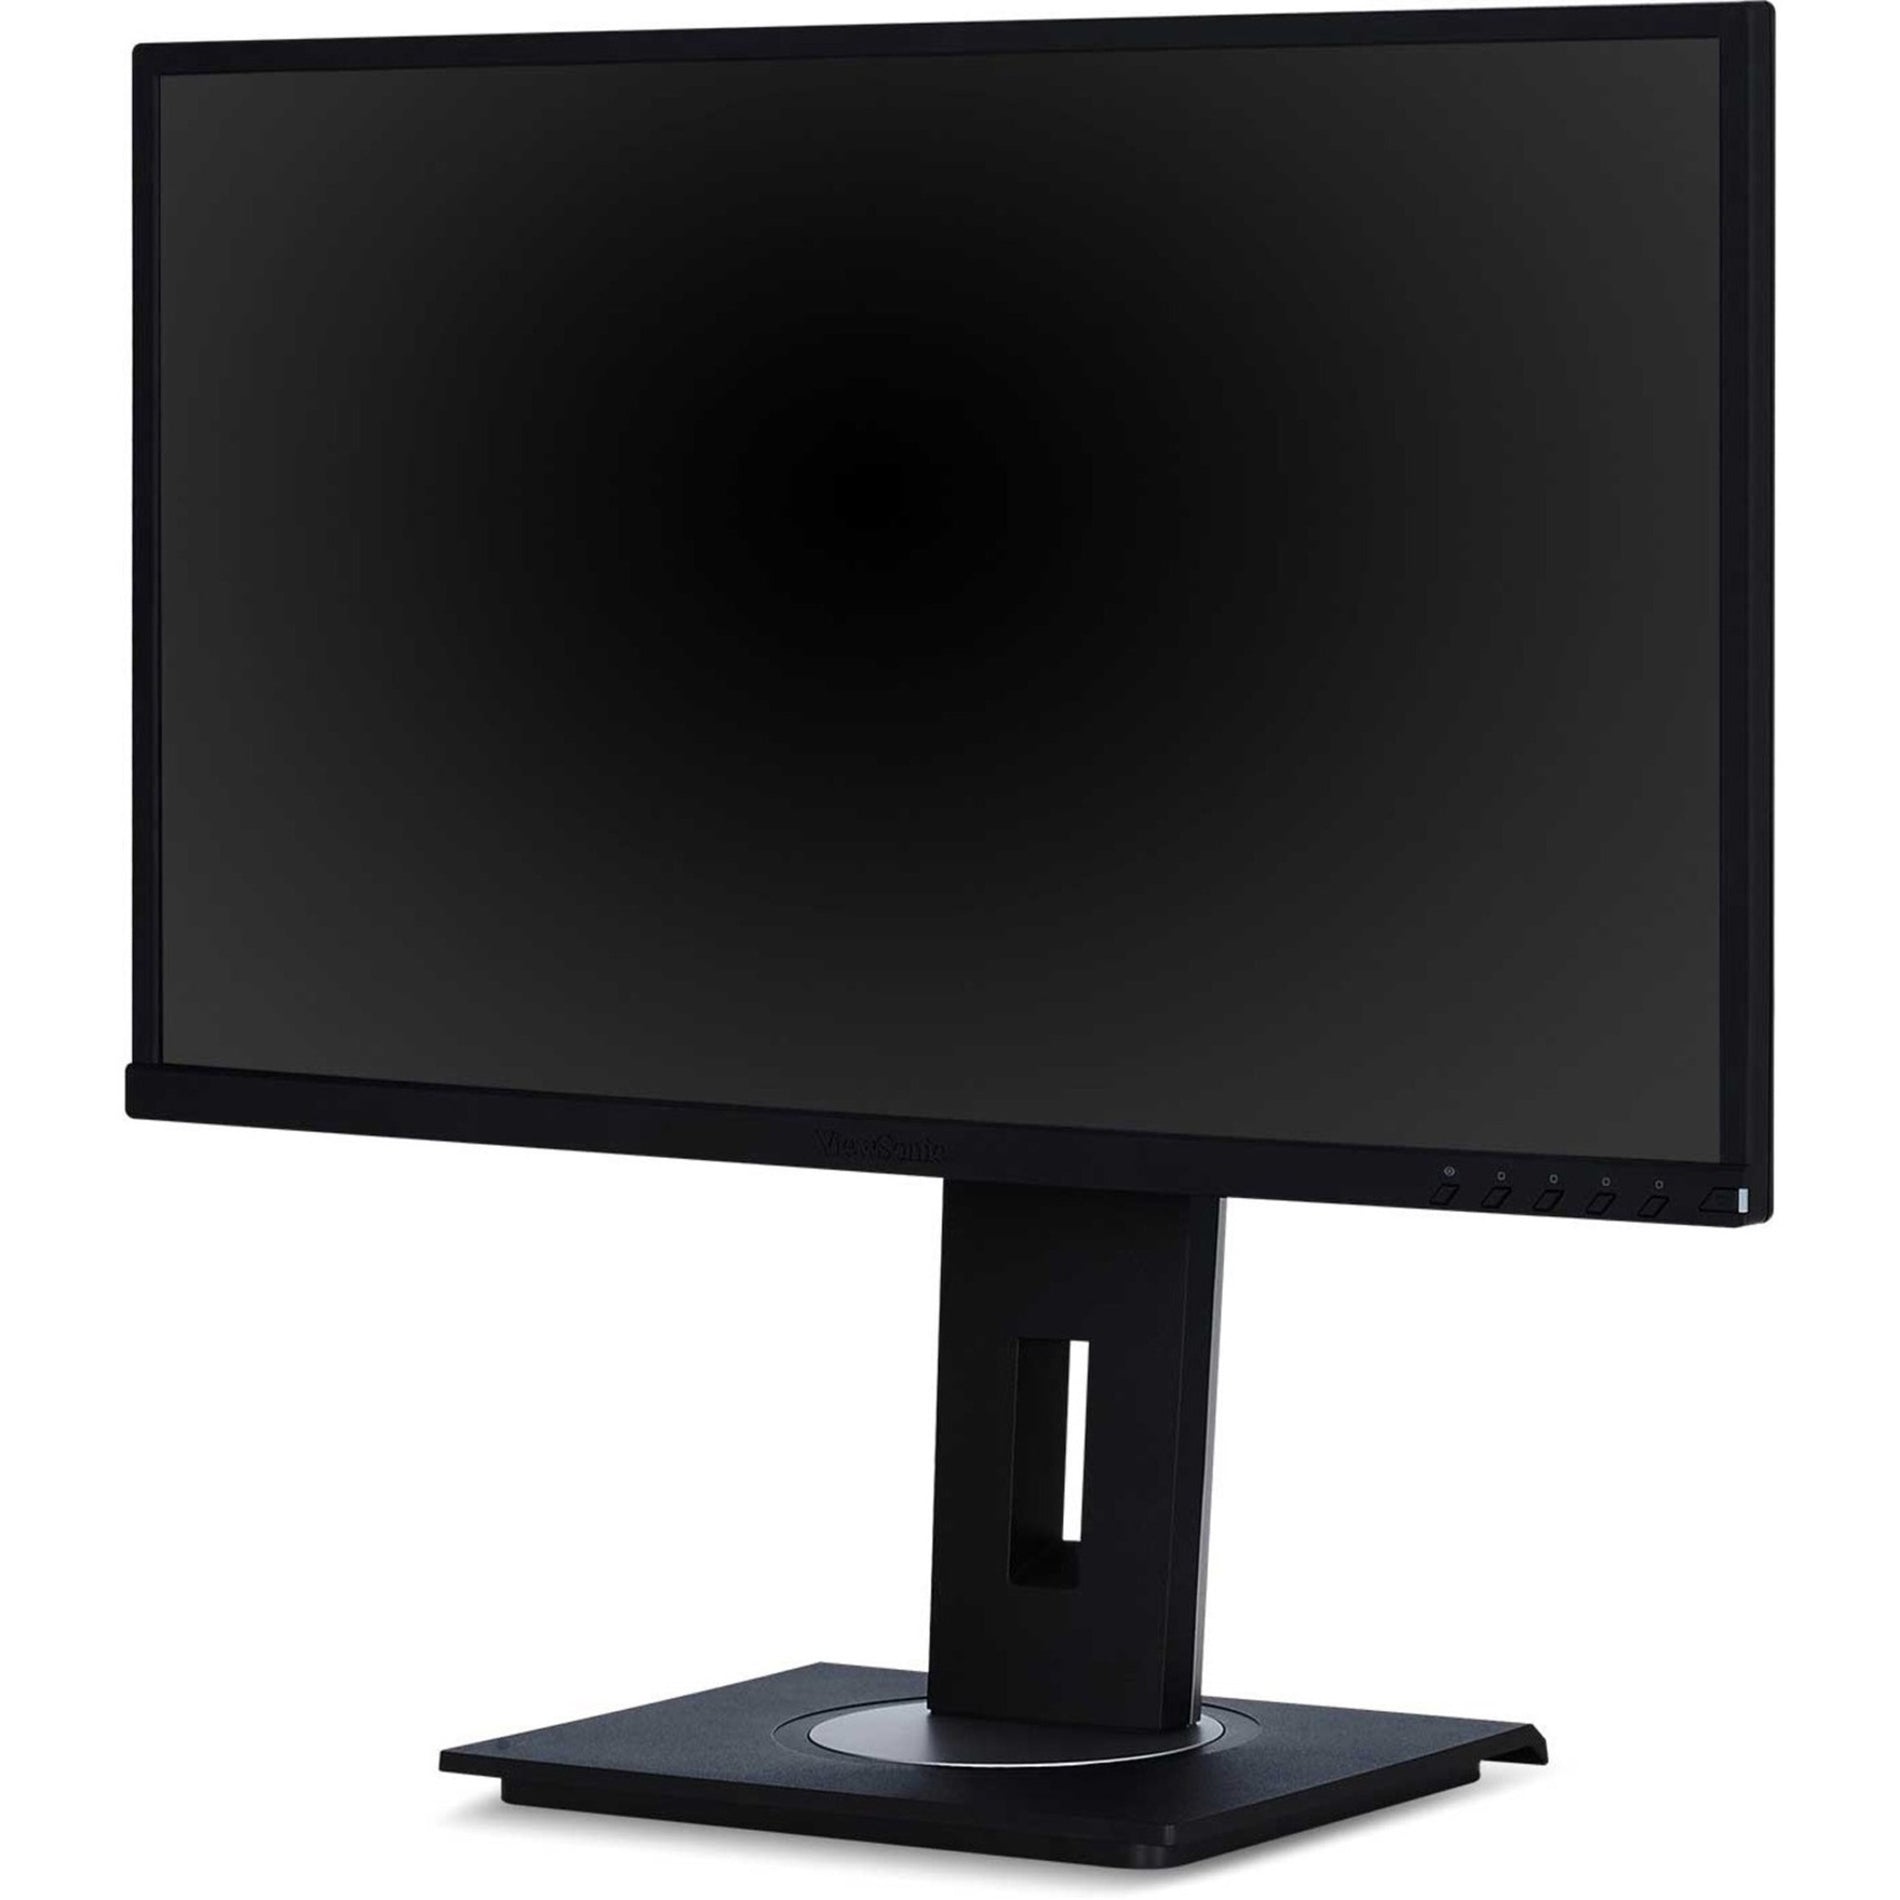 ViewSonic VG2748 Widescreen LCD Monitor, 27" Full HD, Advanced Ergonomics